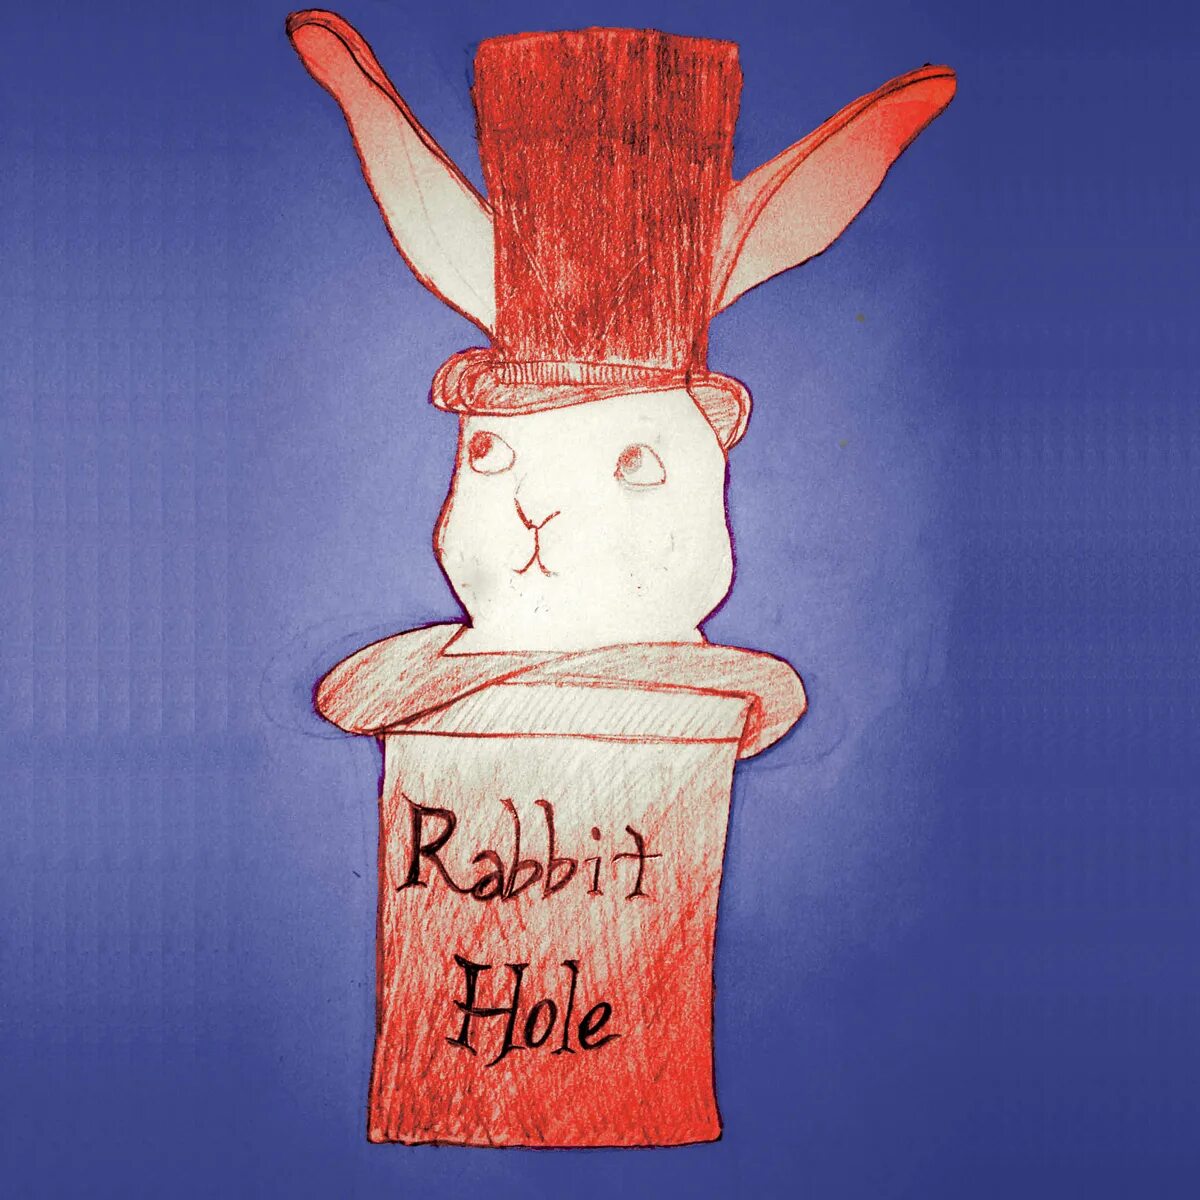 Rabbit hole download. Rabbit hole. The Rabbit hole картинки. Кролик и дыра. Аватарка Rabbit hole.